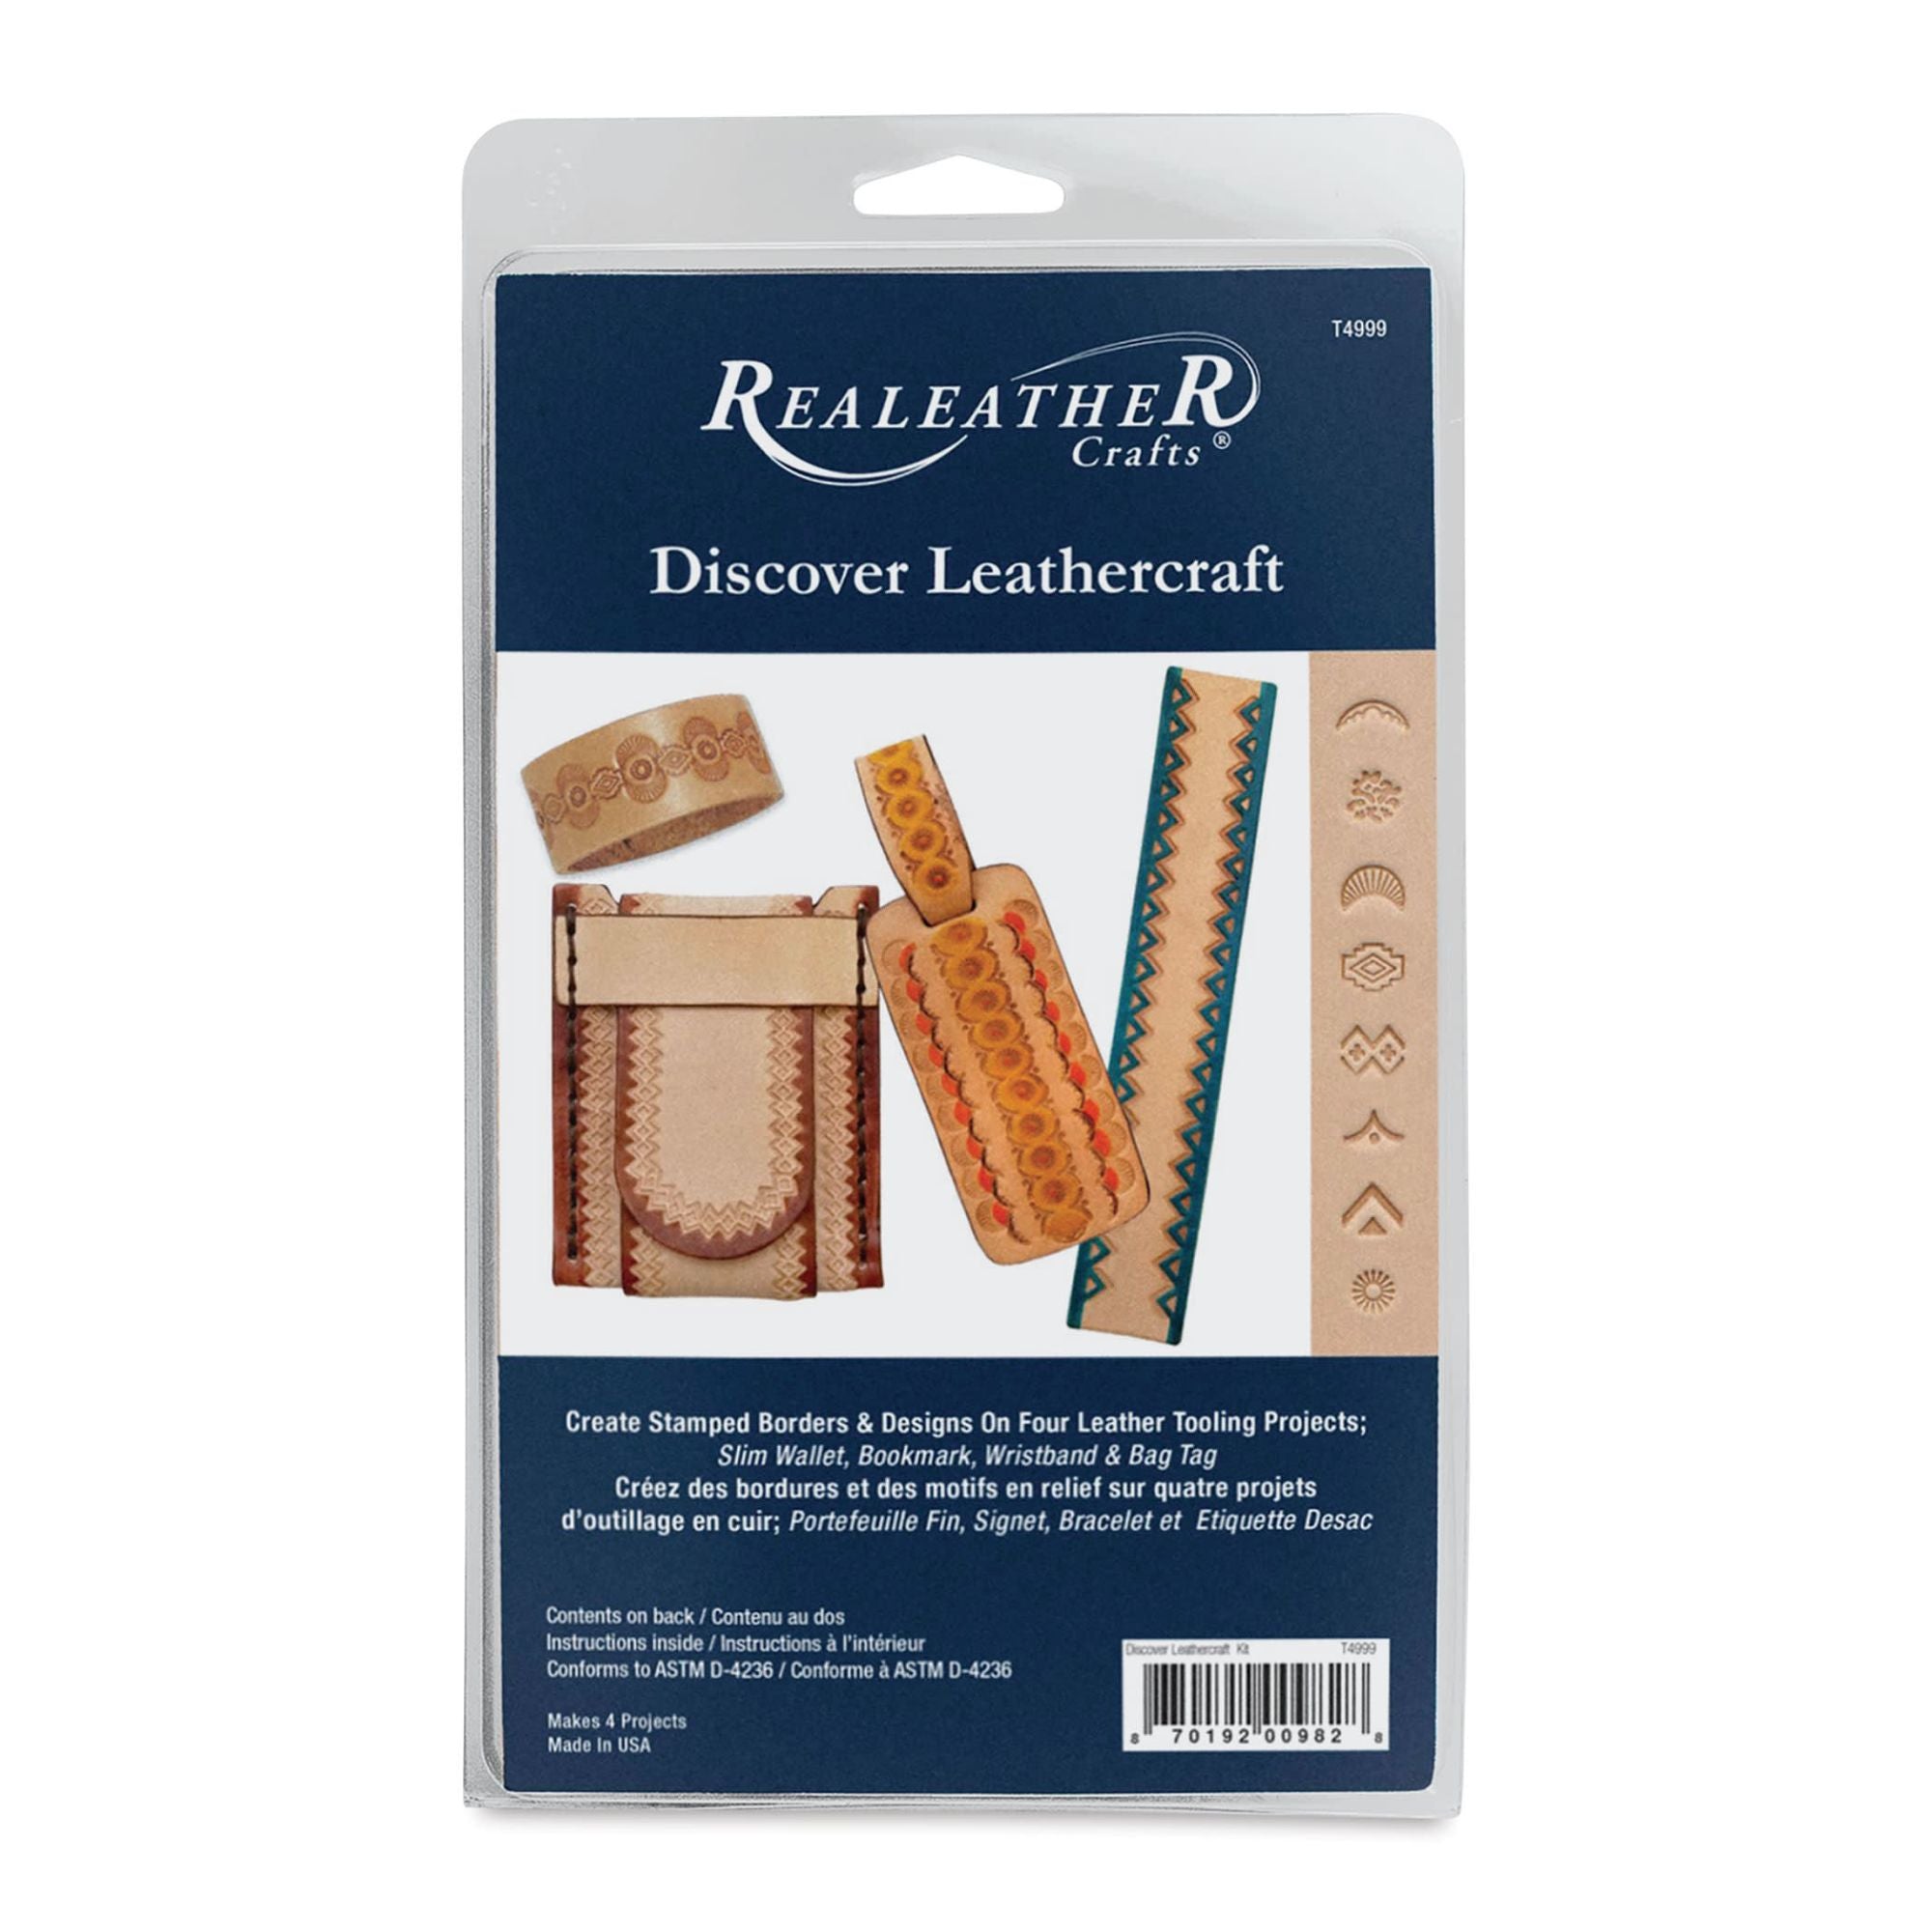 Discover Leathercraft Kit